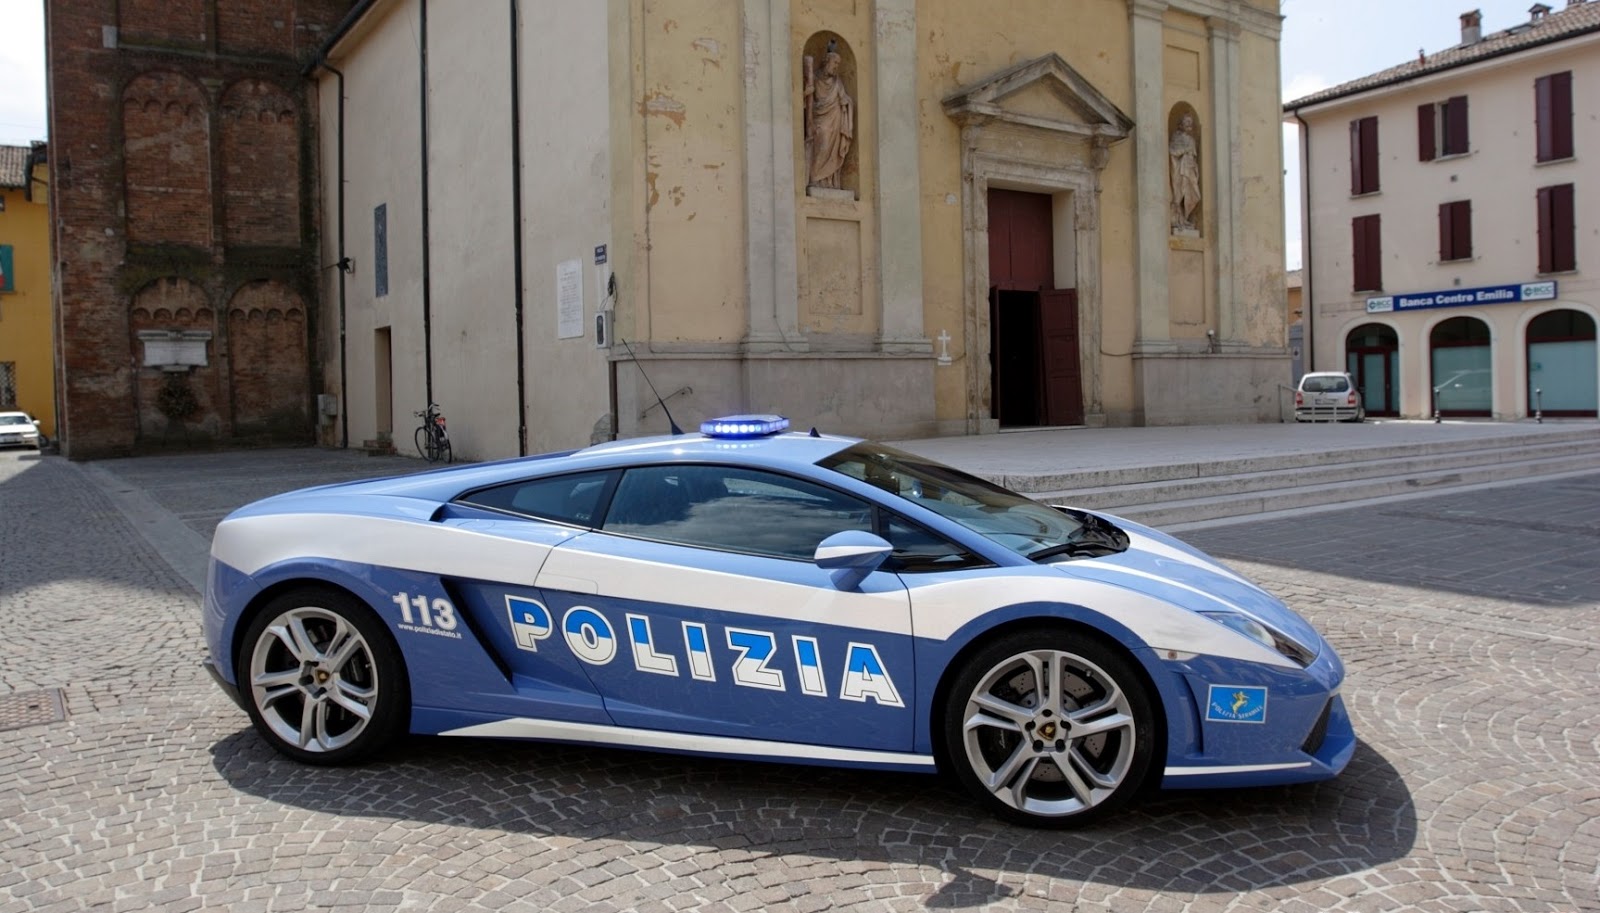 5 Mobil Polisi Tercanggih Di Dunia WOW Twins Blog